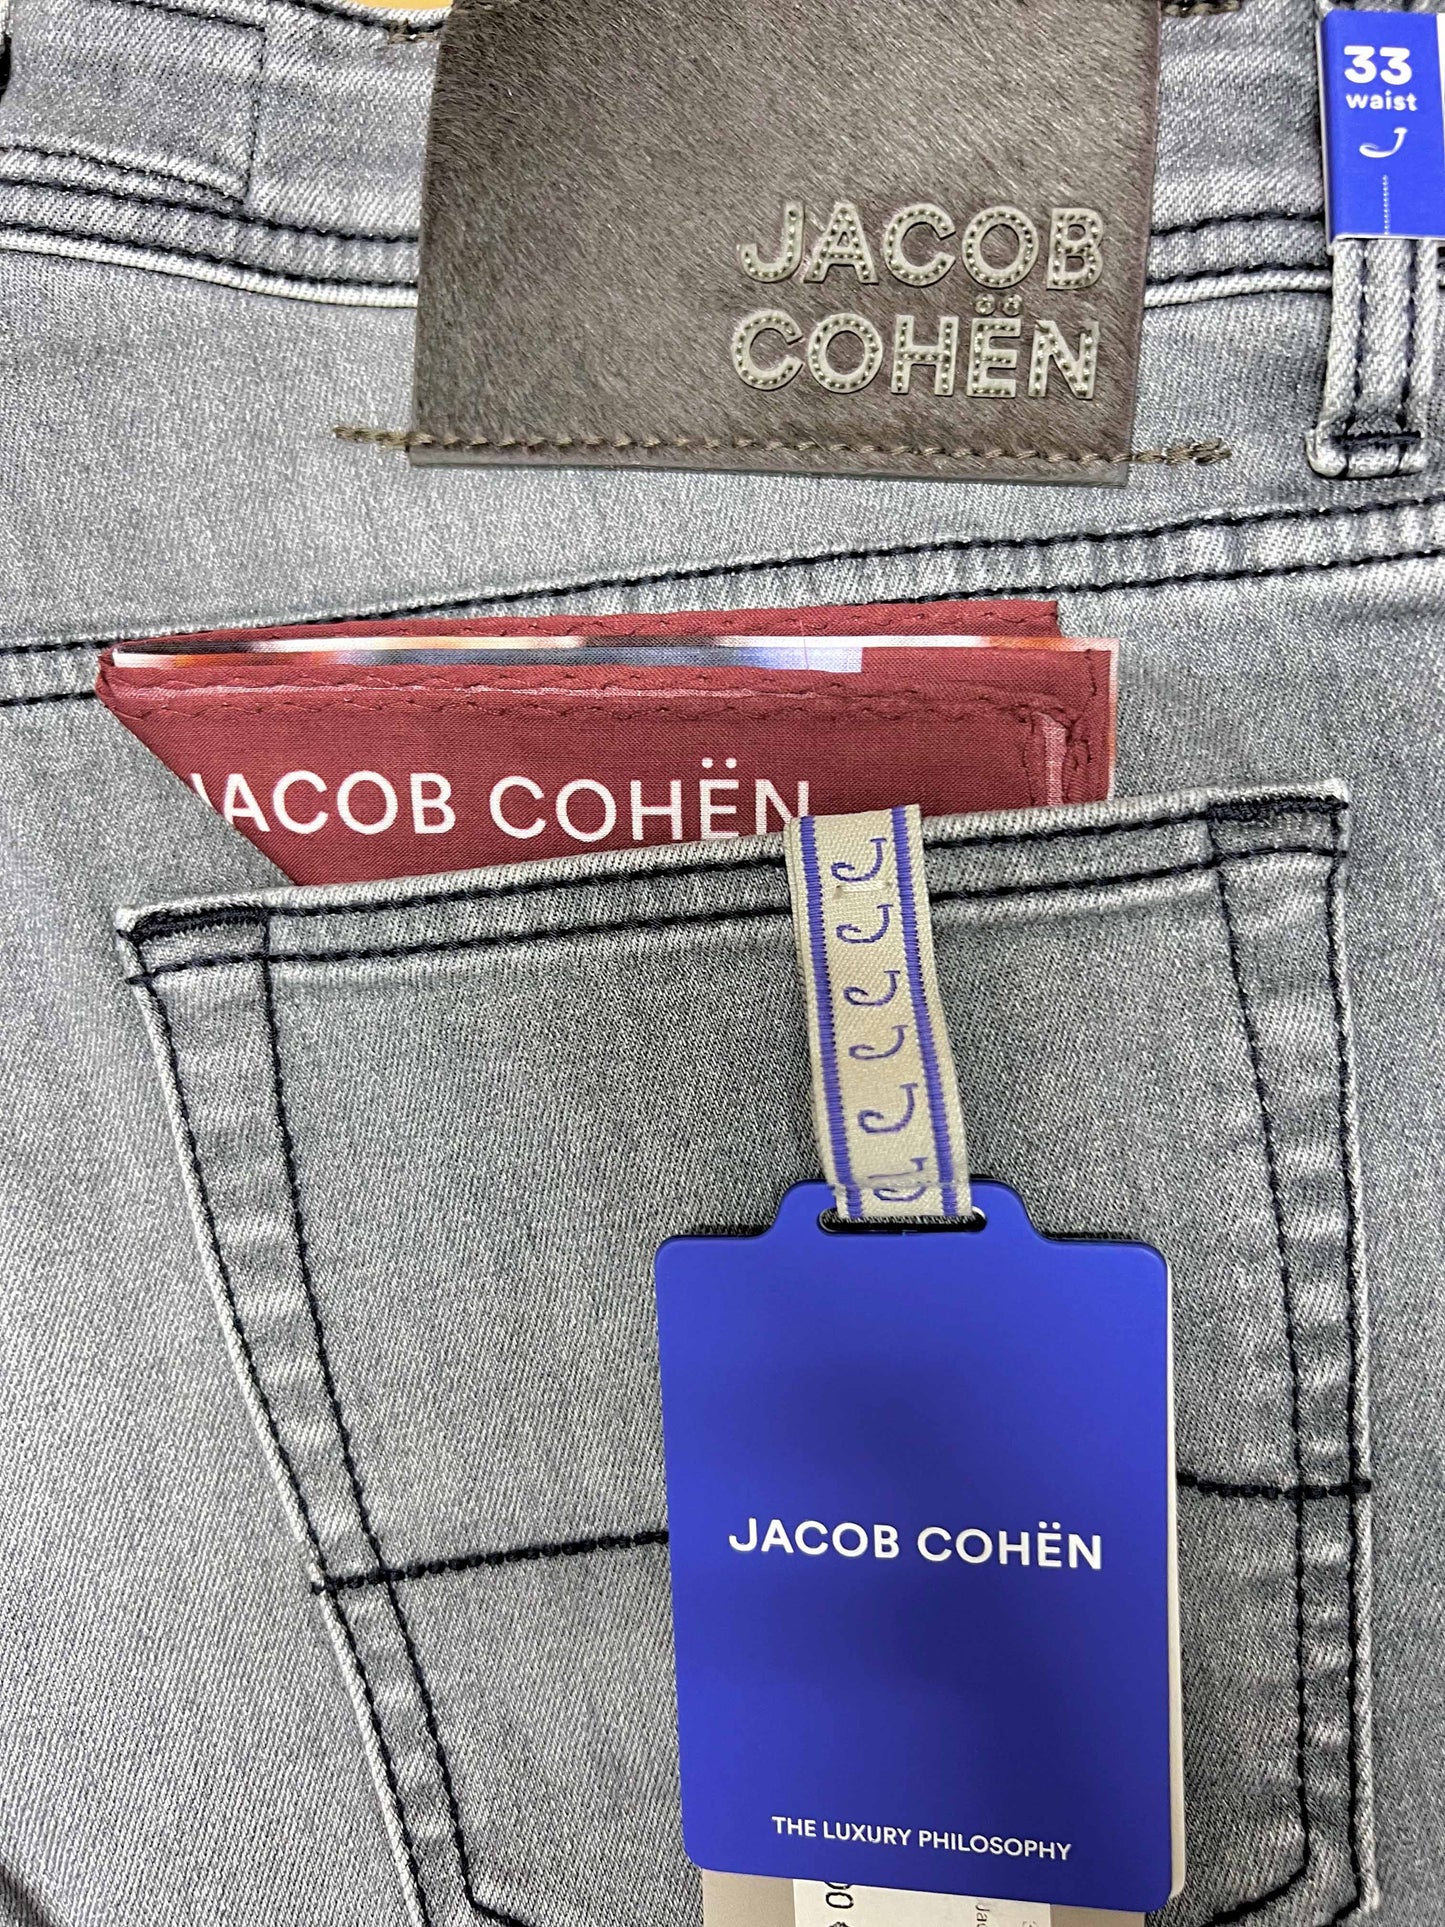 Jacob Cohen, Nick slim, taupe label, light grey Jacob Cohen